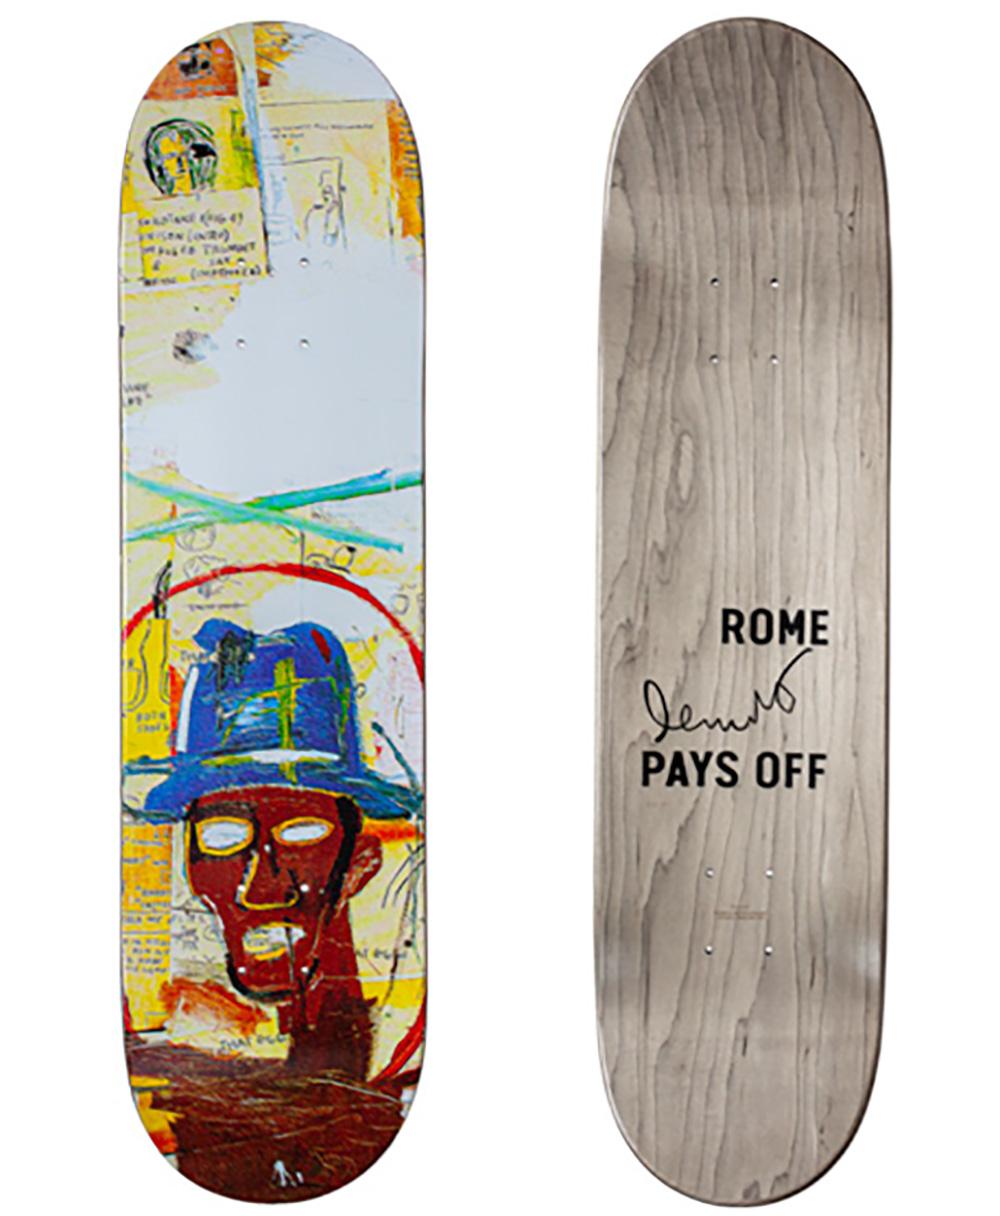 Basquiat Keith Haring skateboard decks (set of 2 works)  For Sale 1